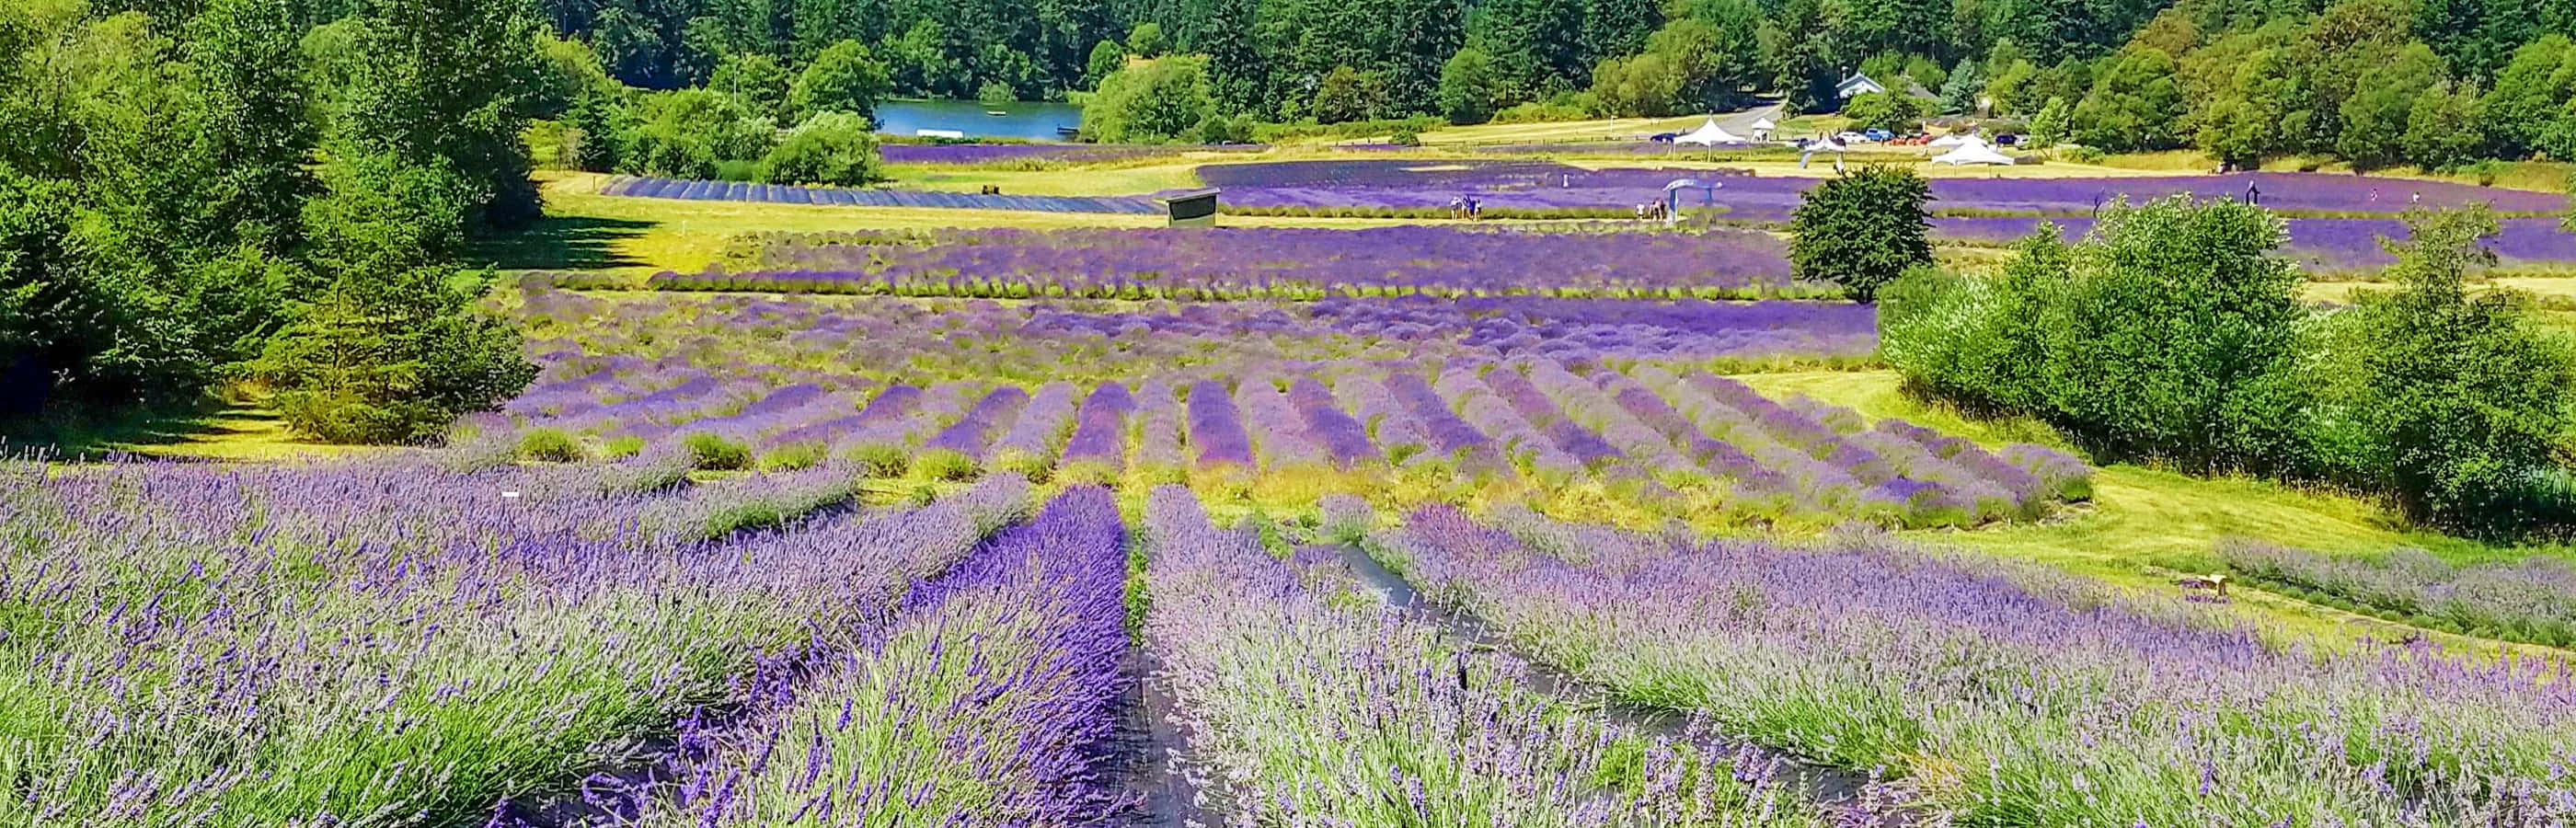 Enjoy the beauty of peaceful lavender fields